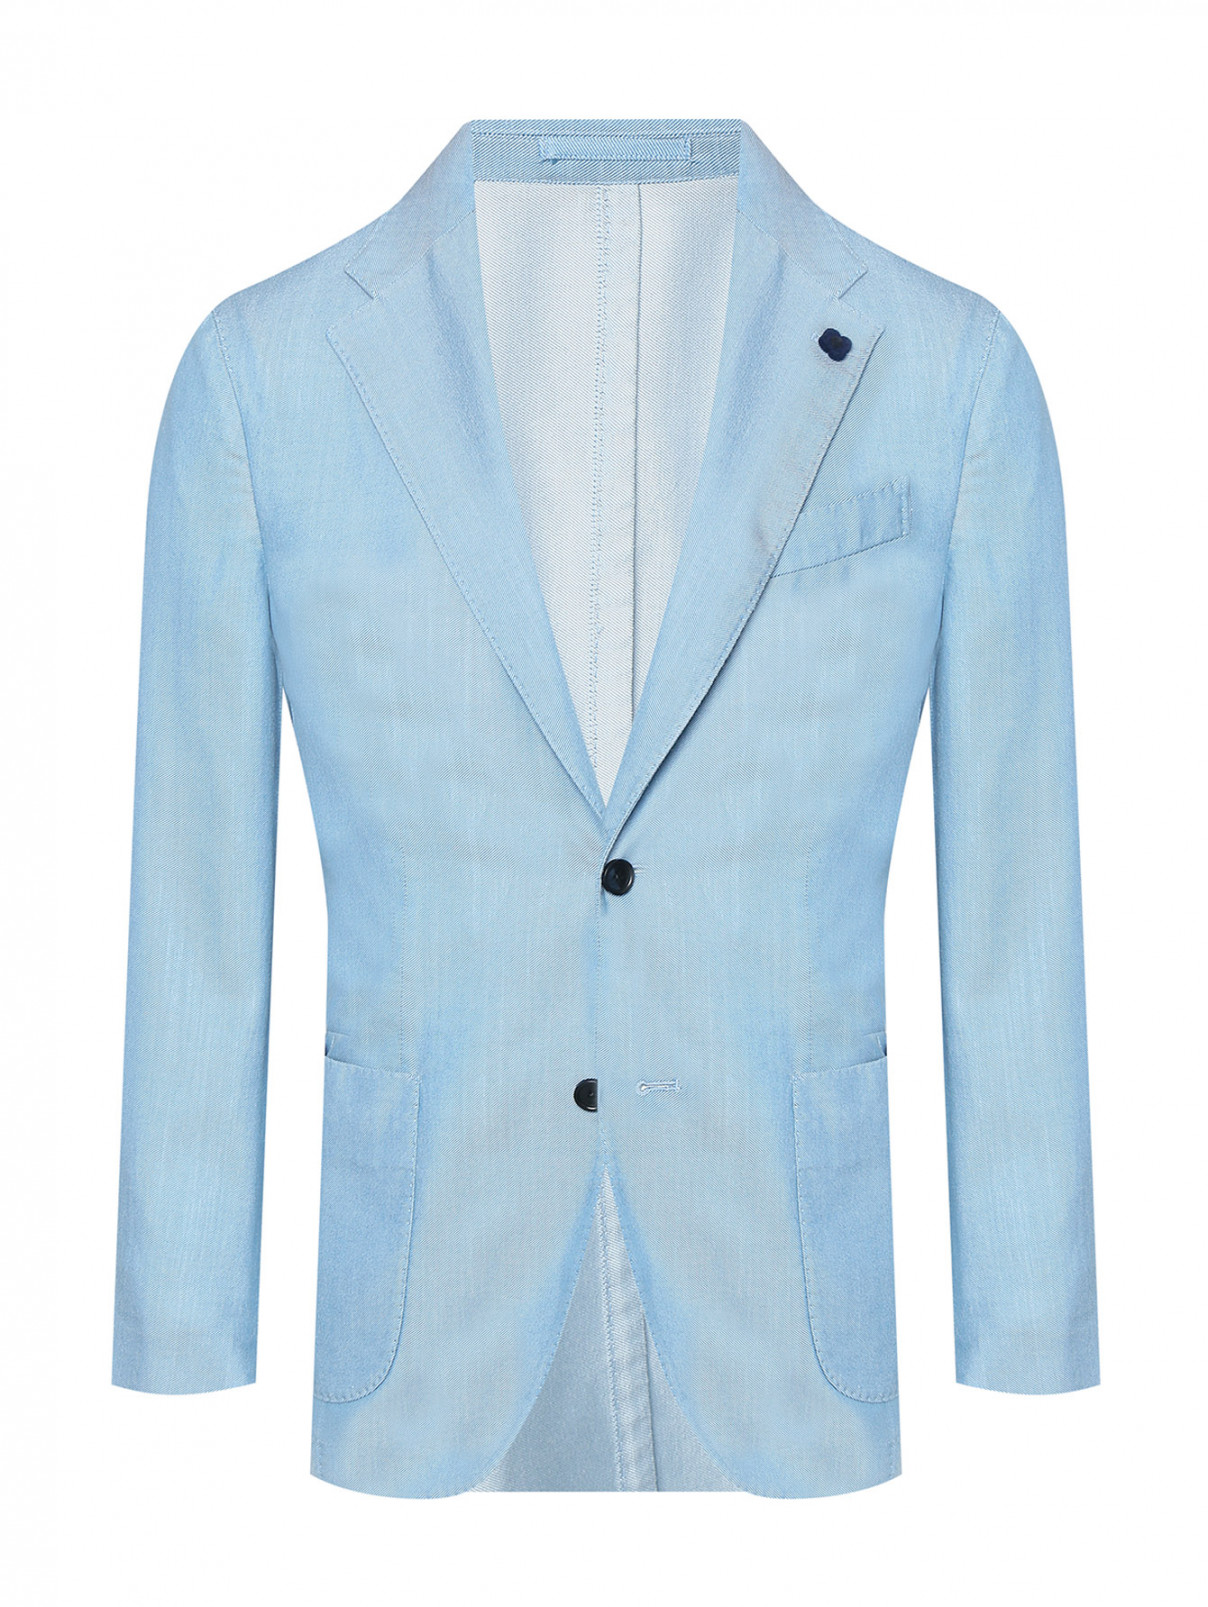 Пиджак на пуговицах с карманами LARDINI  –  Общий вид  – Цвет:  Синий